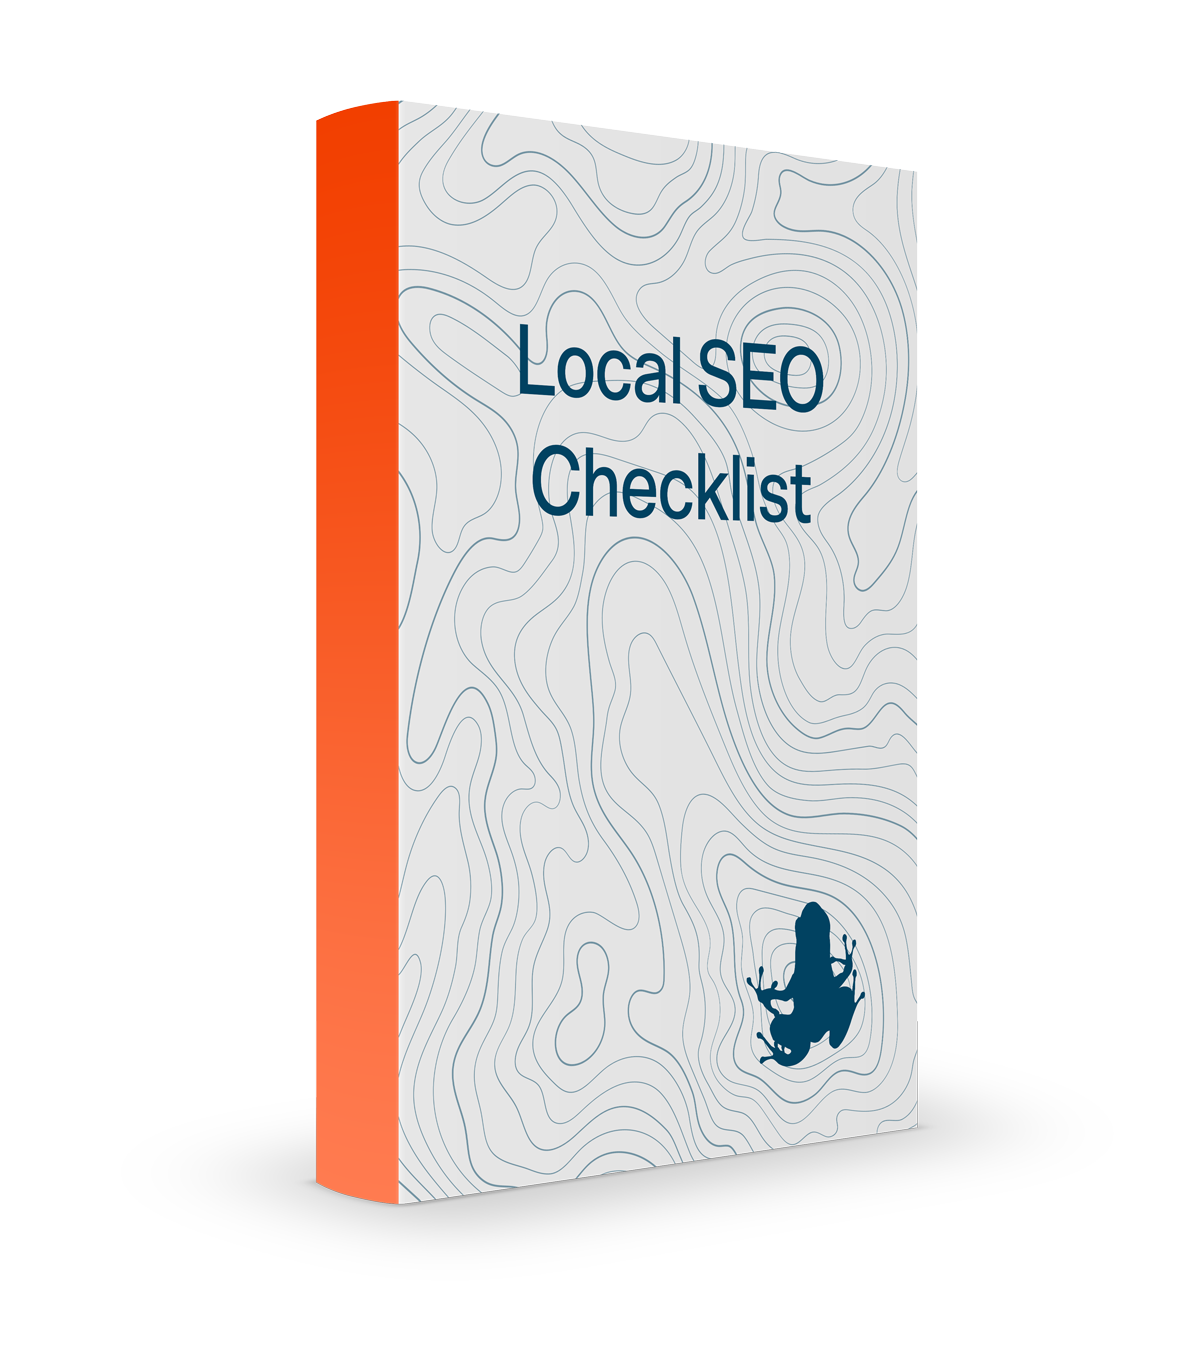 Local SEO Checklist ebook